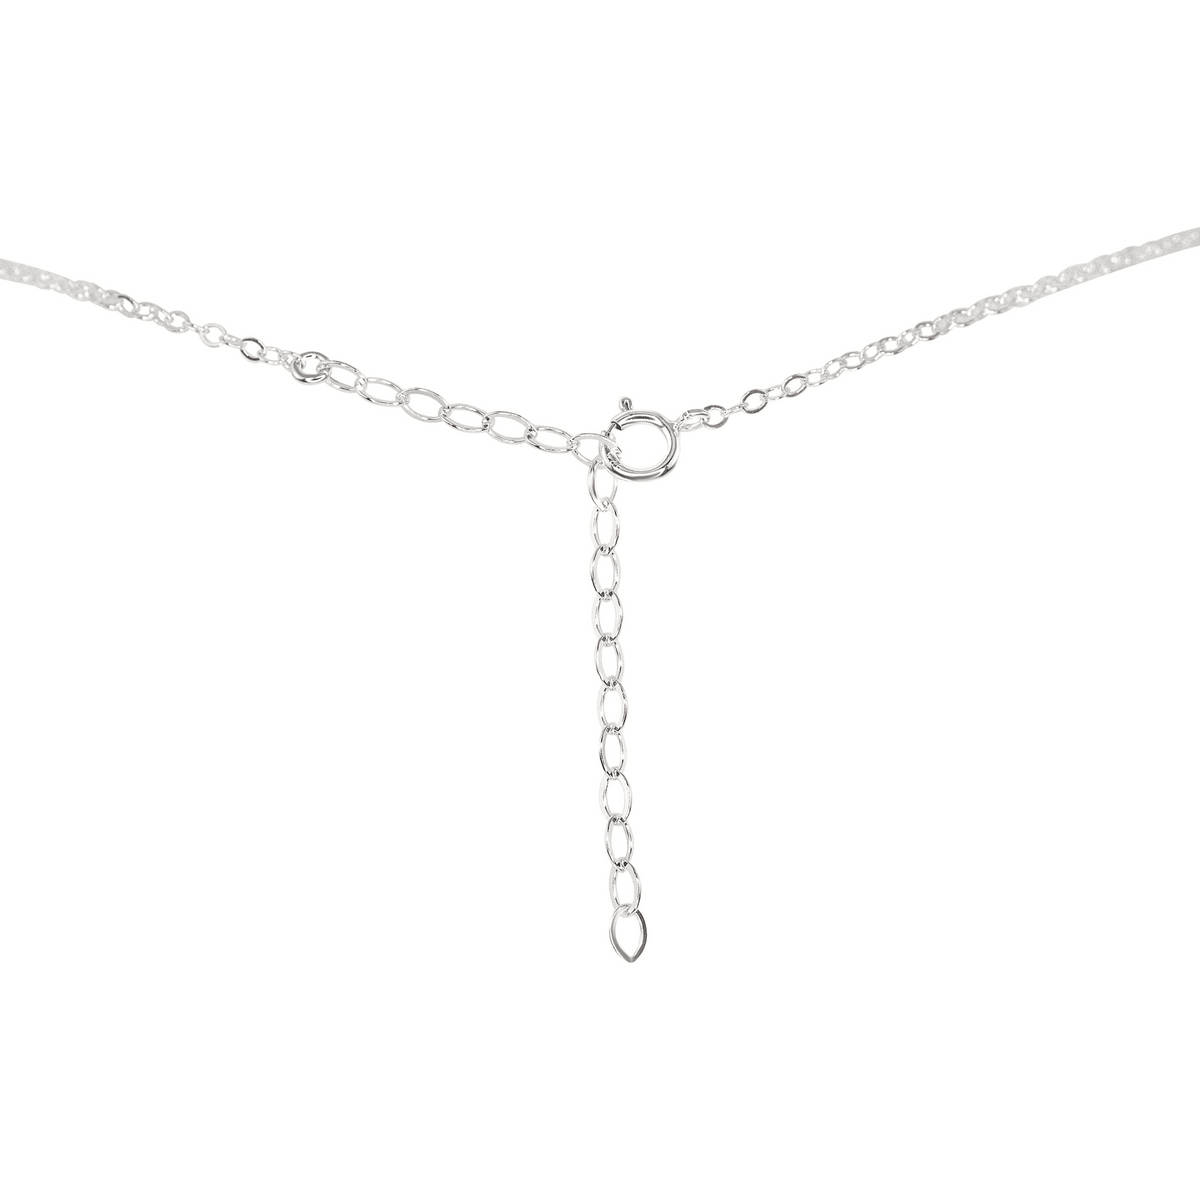 Tiny Raw Kyanite Pendant Necklace - Tiny Raw Kyanite Pendant Necklace - Sterling Silver / Cable - Luna Tide Handmade Crystal Jewellery